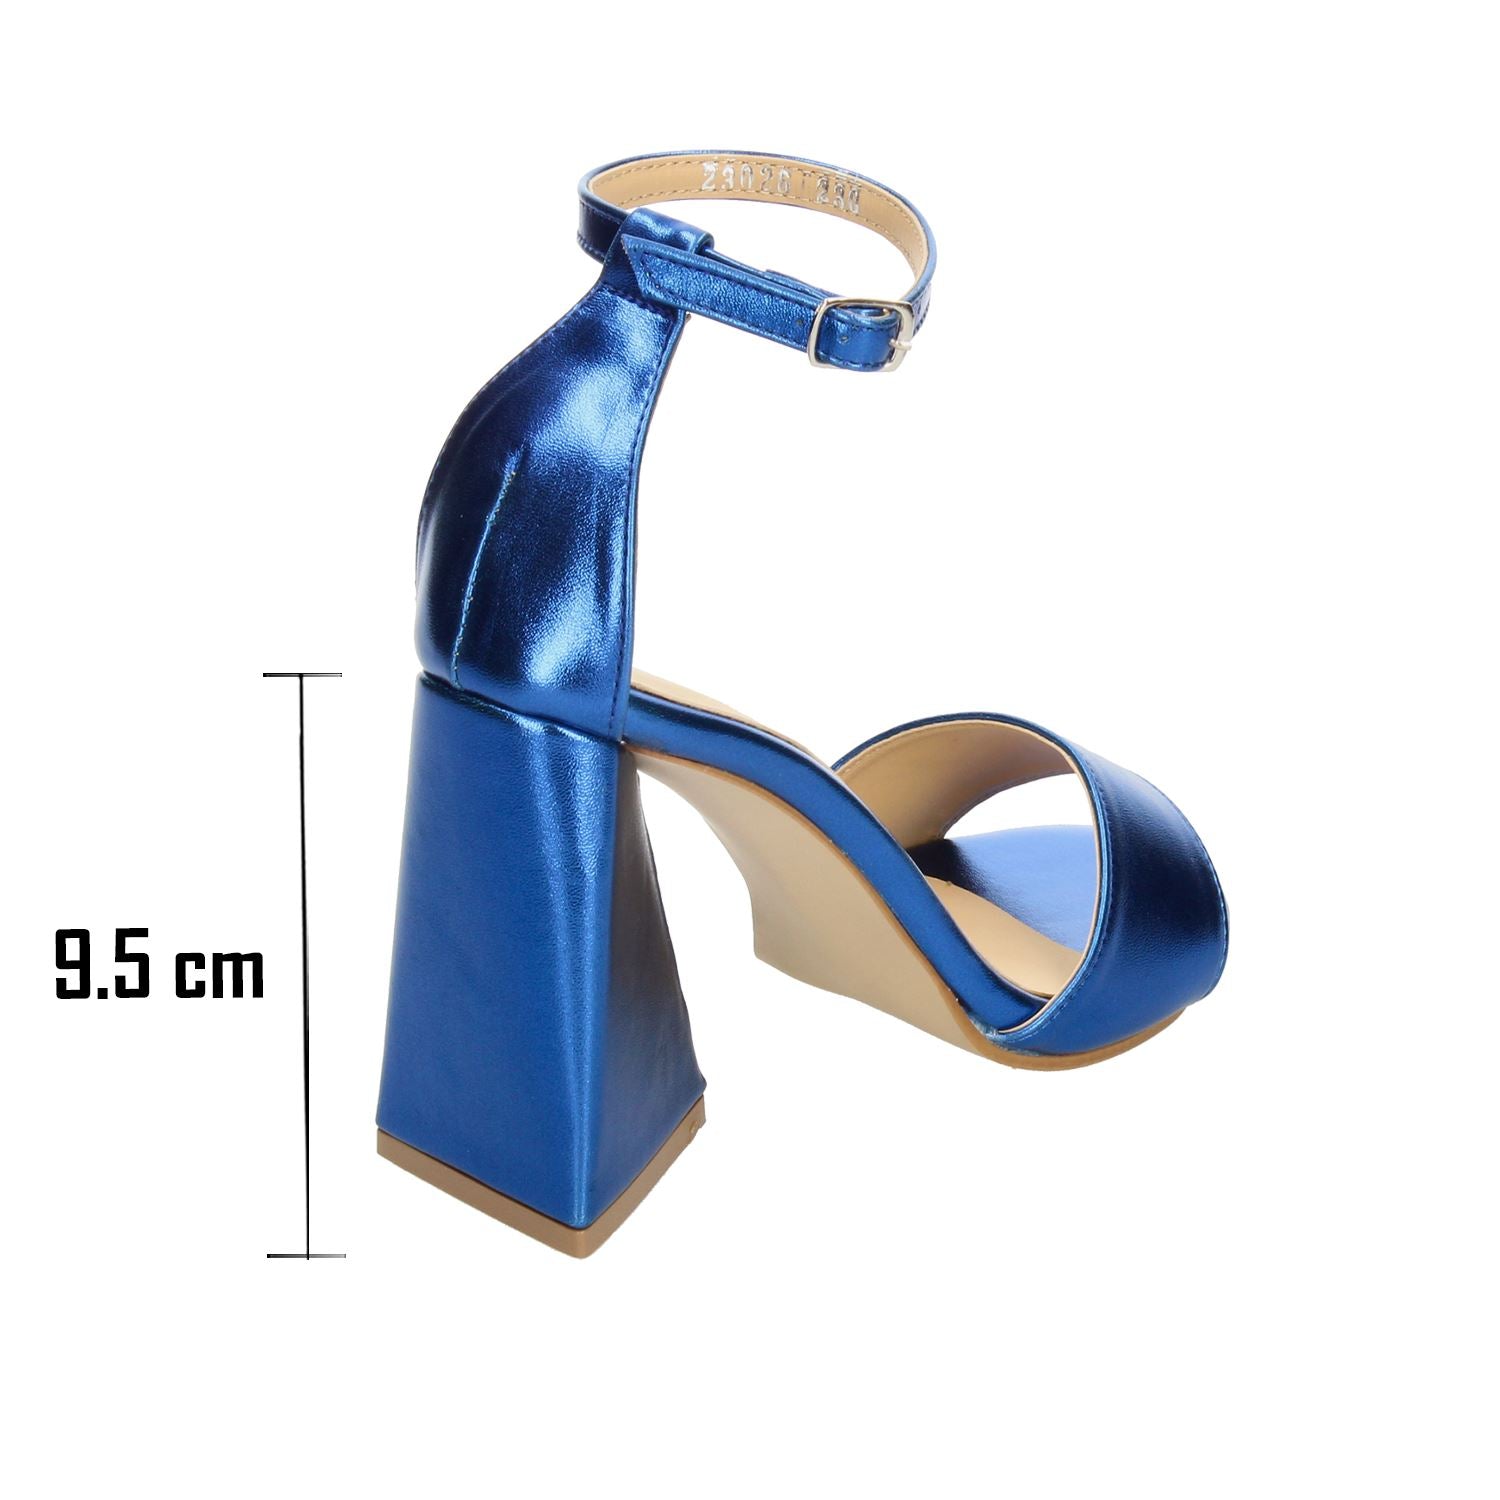 Sandalias de Fiesta Perez lete Azul para Mujer [PLT339] PEREZ LETE 